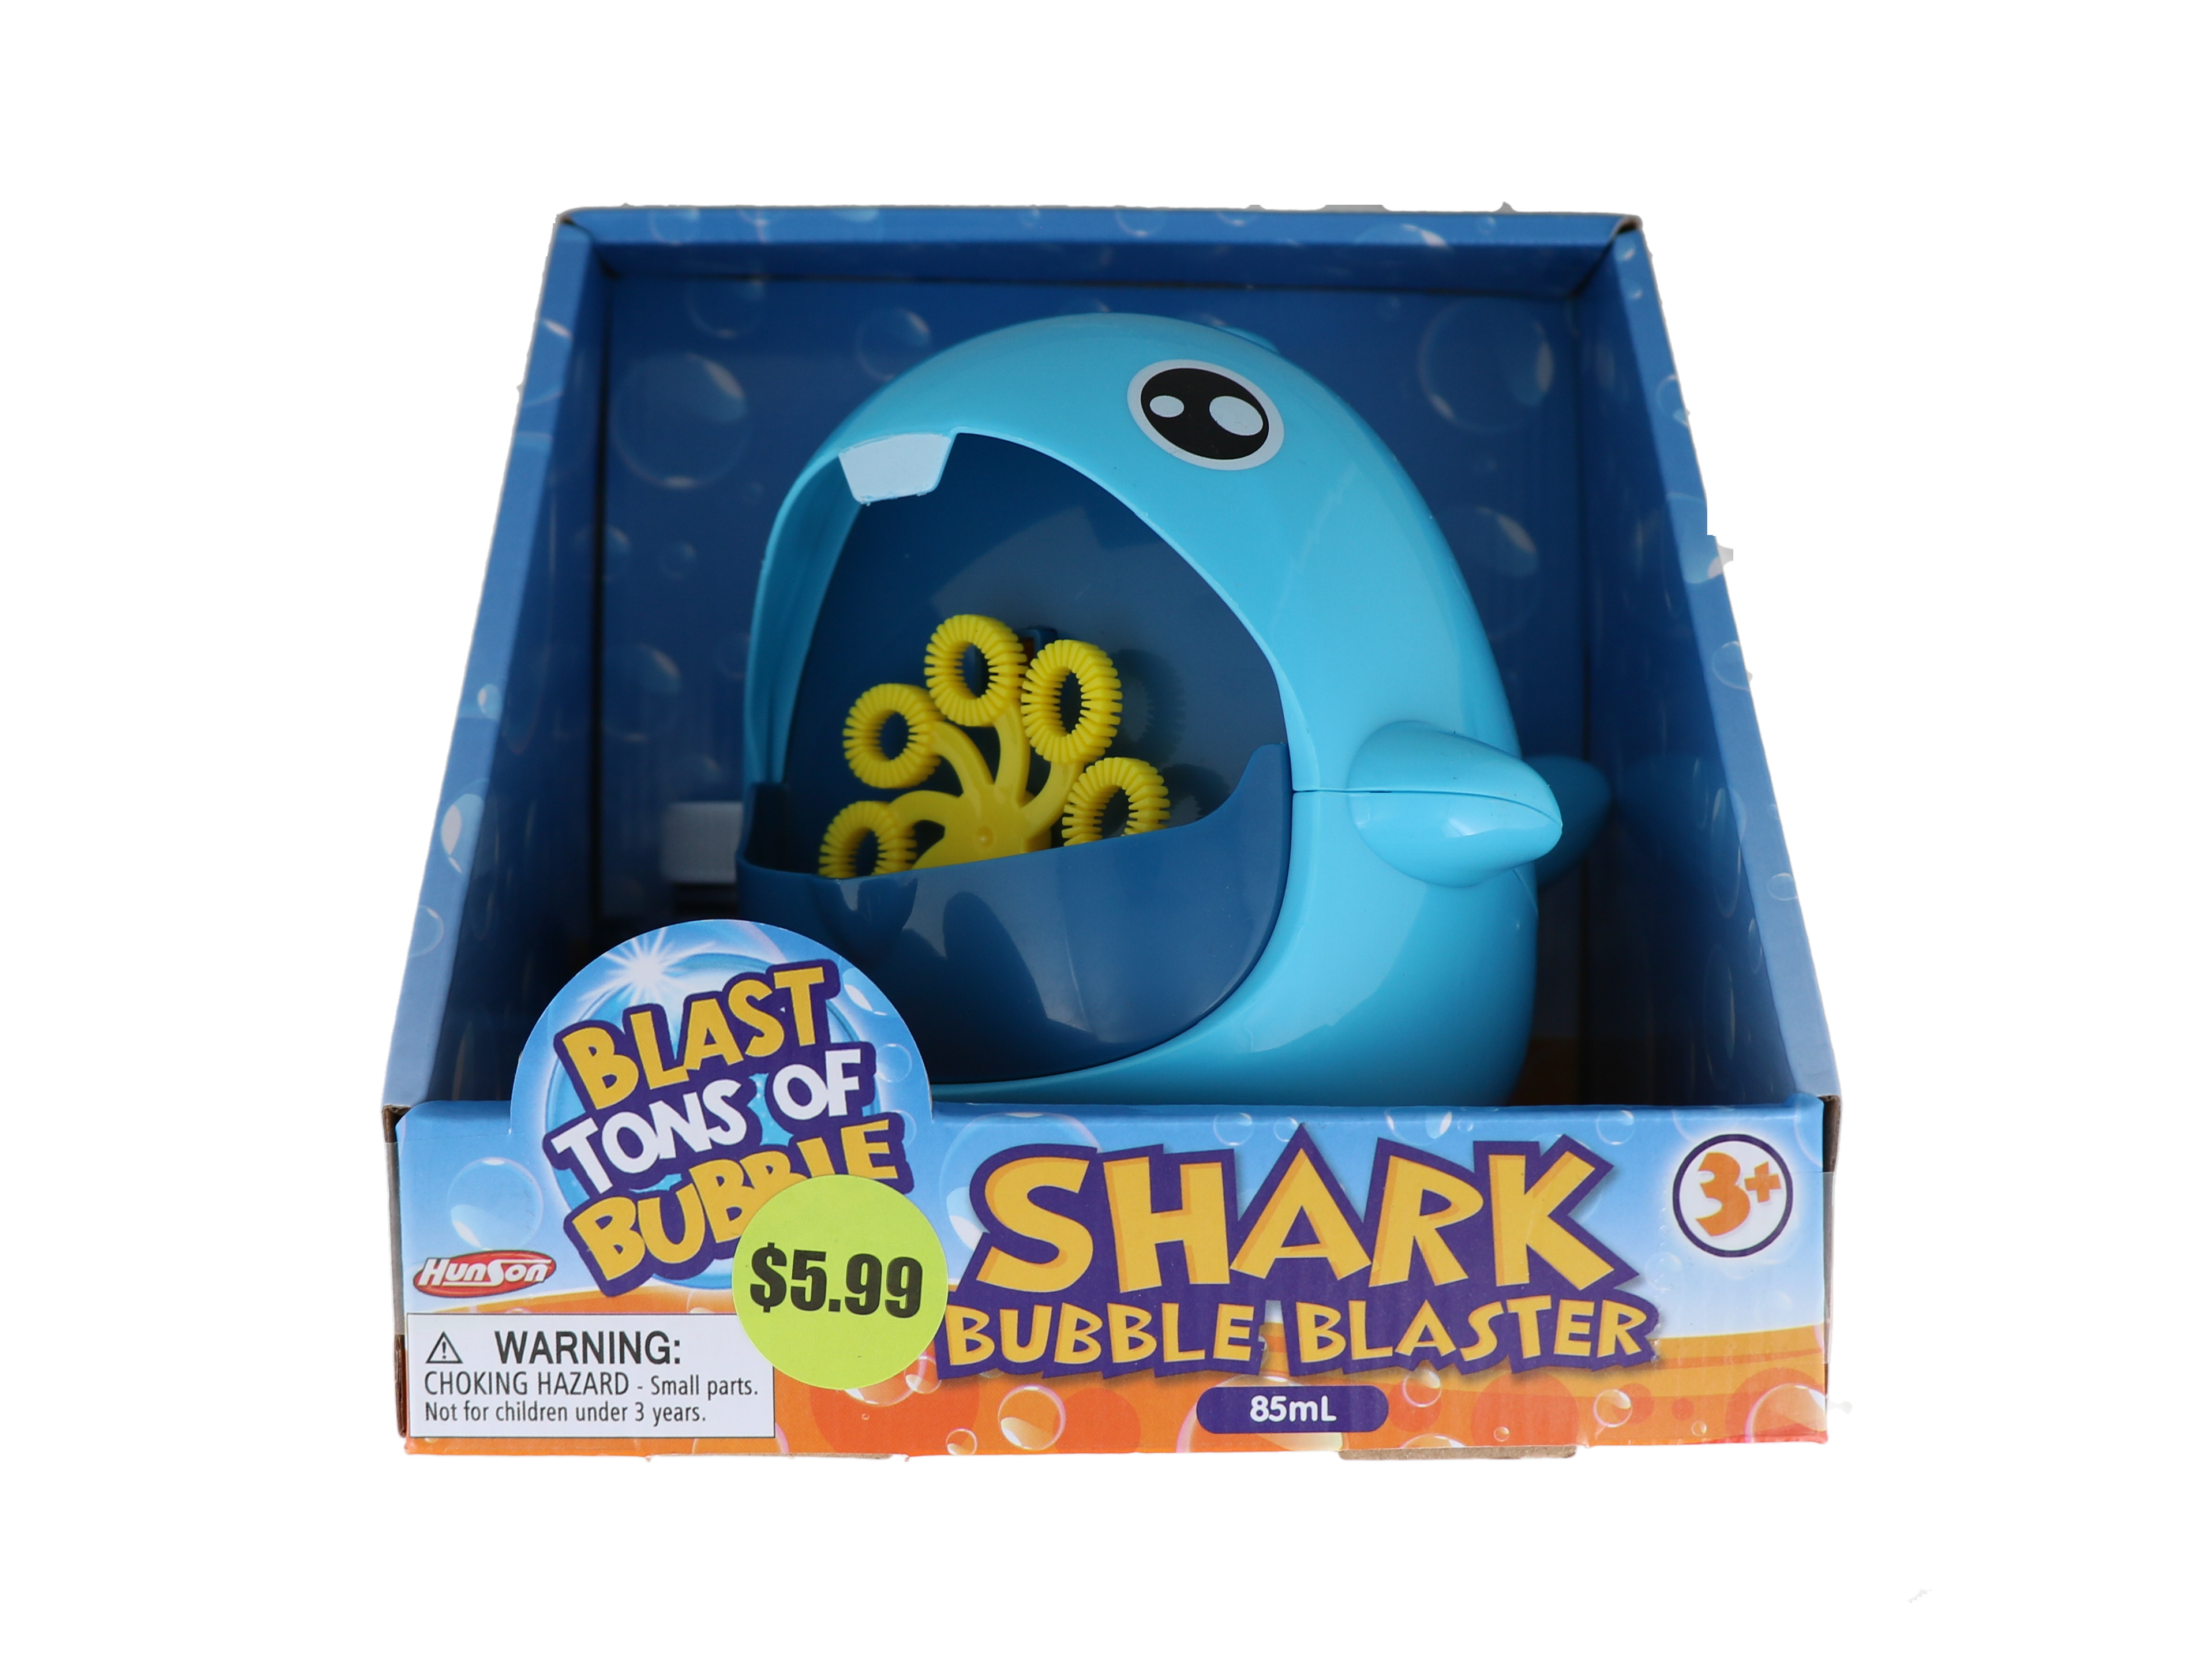 5.99 SHARK BUBBLE BLASTER